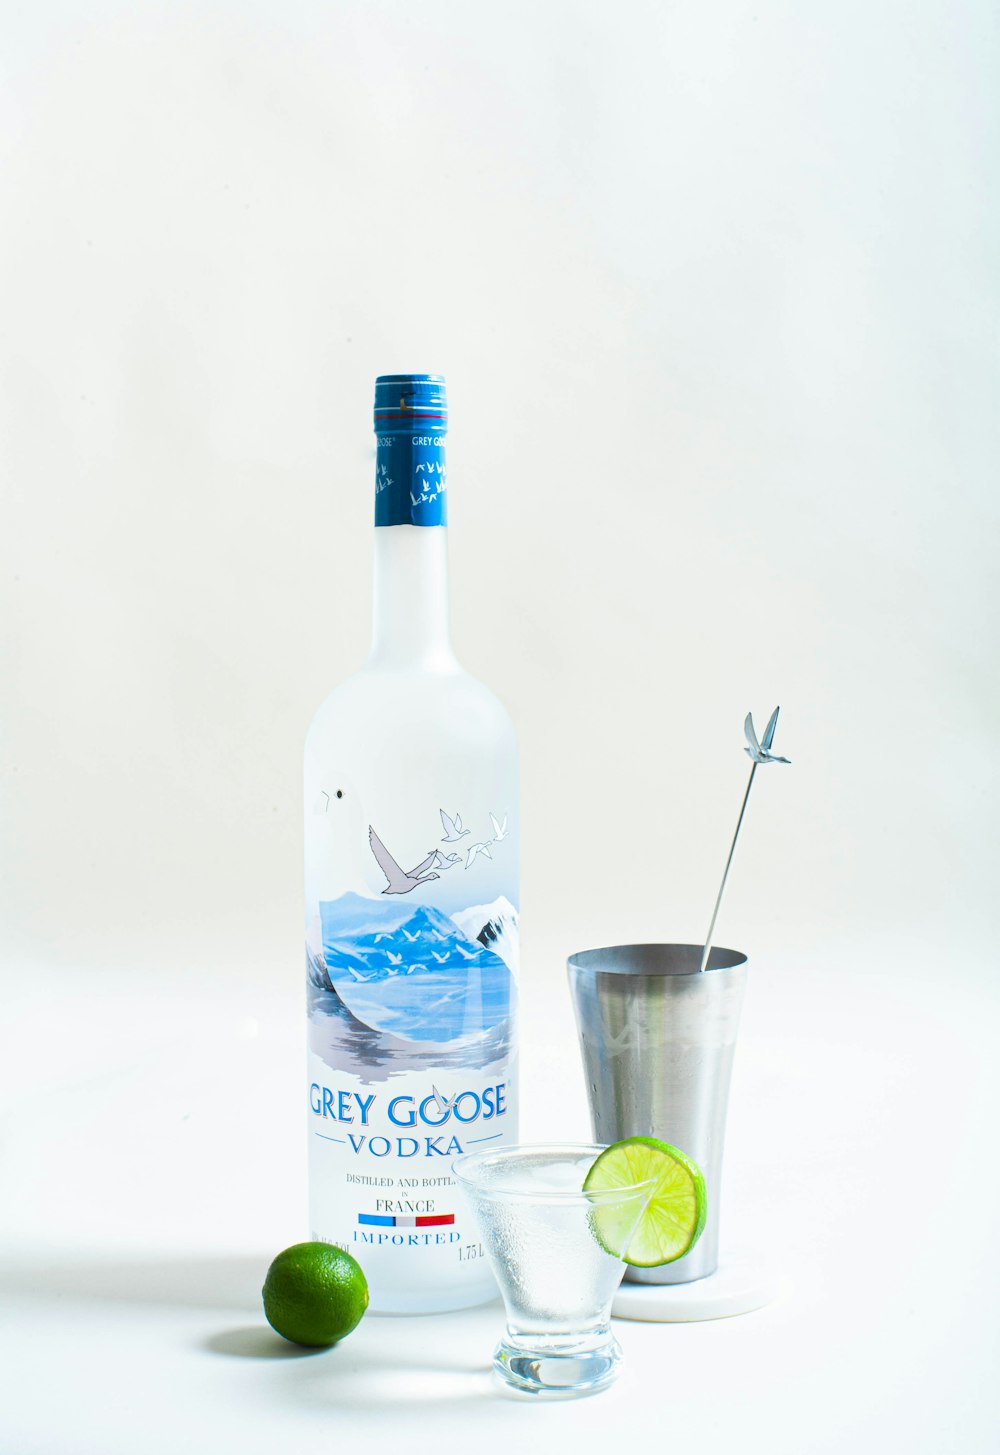 a bottle of grey goose vodka next to a shot glass